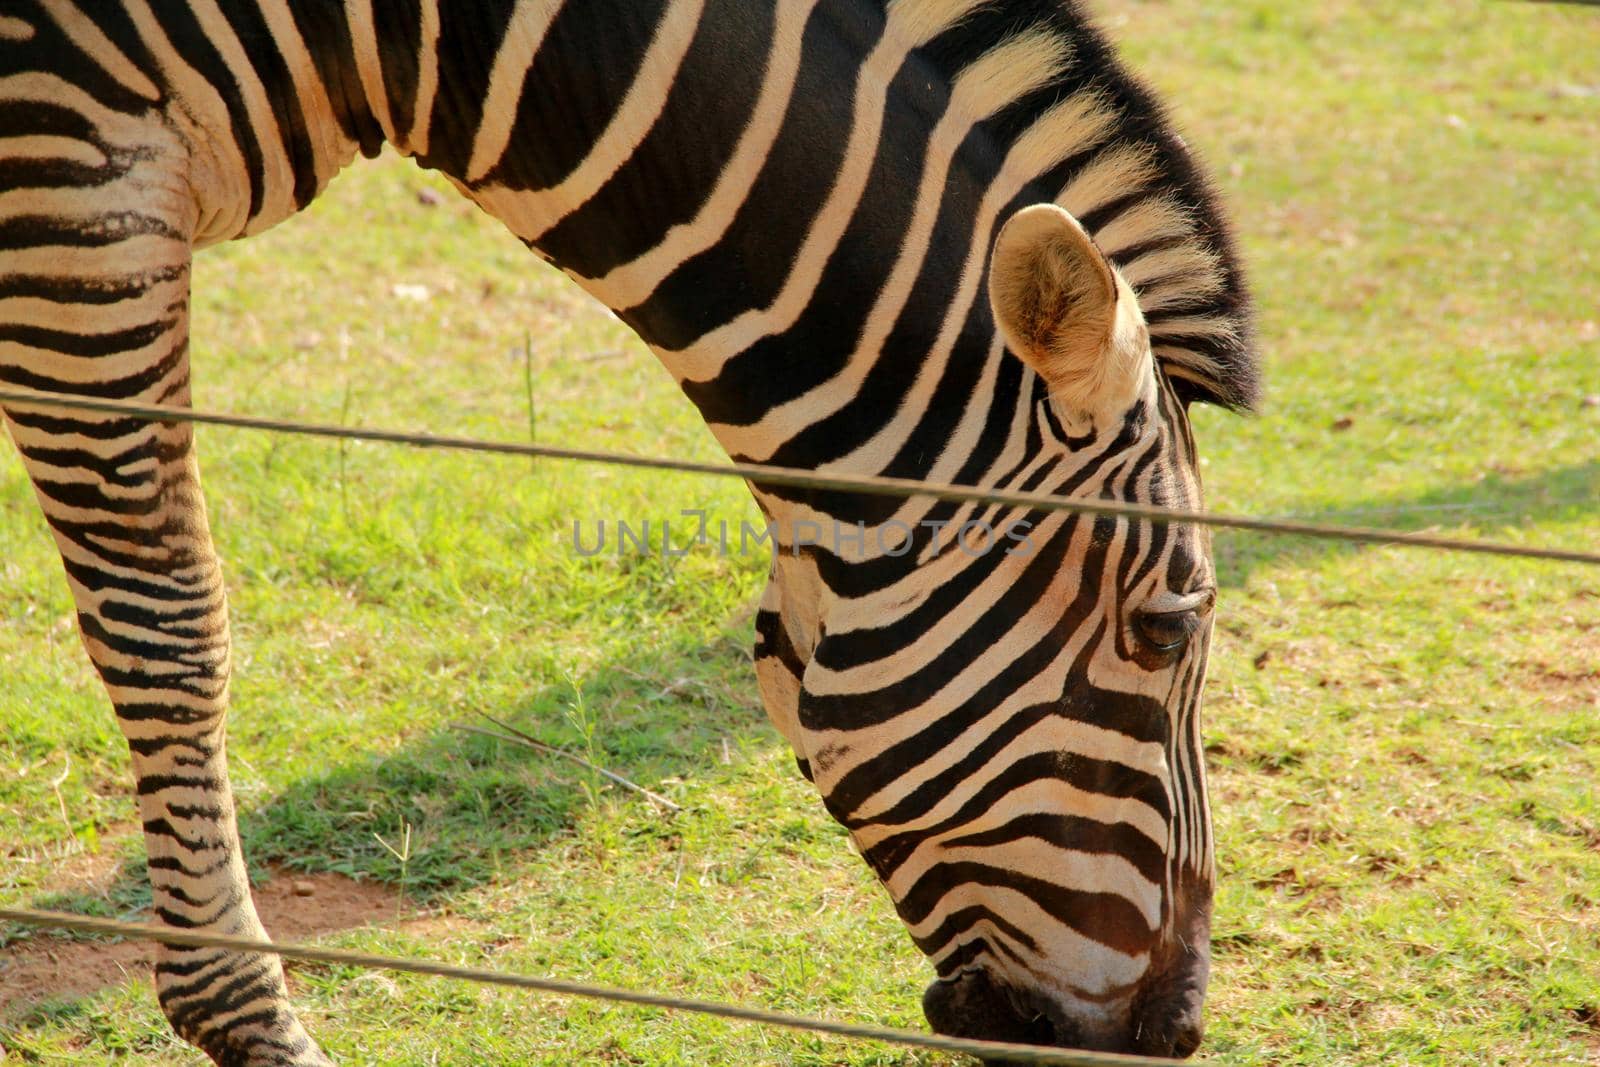 salvador, bahia / brazil - september 22, 2012: zebra is seen in a zoo in the city of Salvador.

